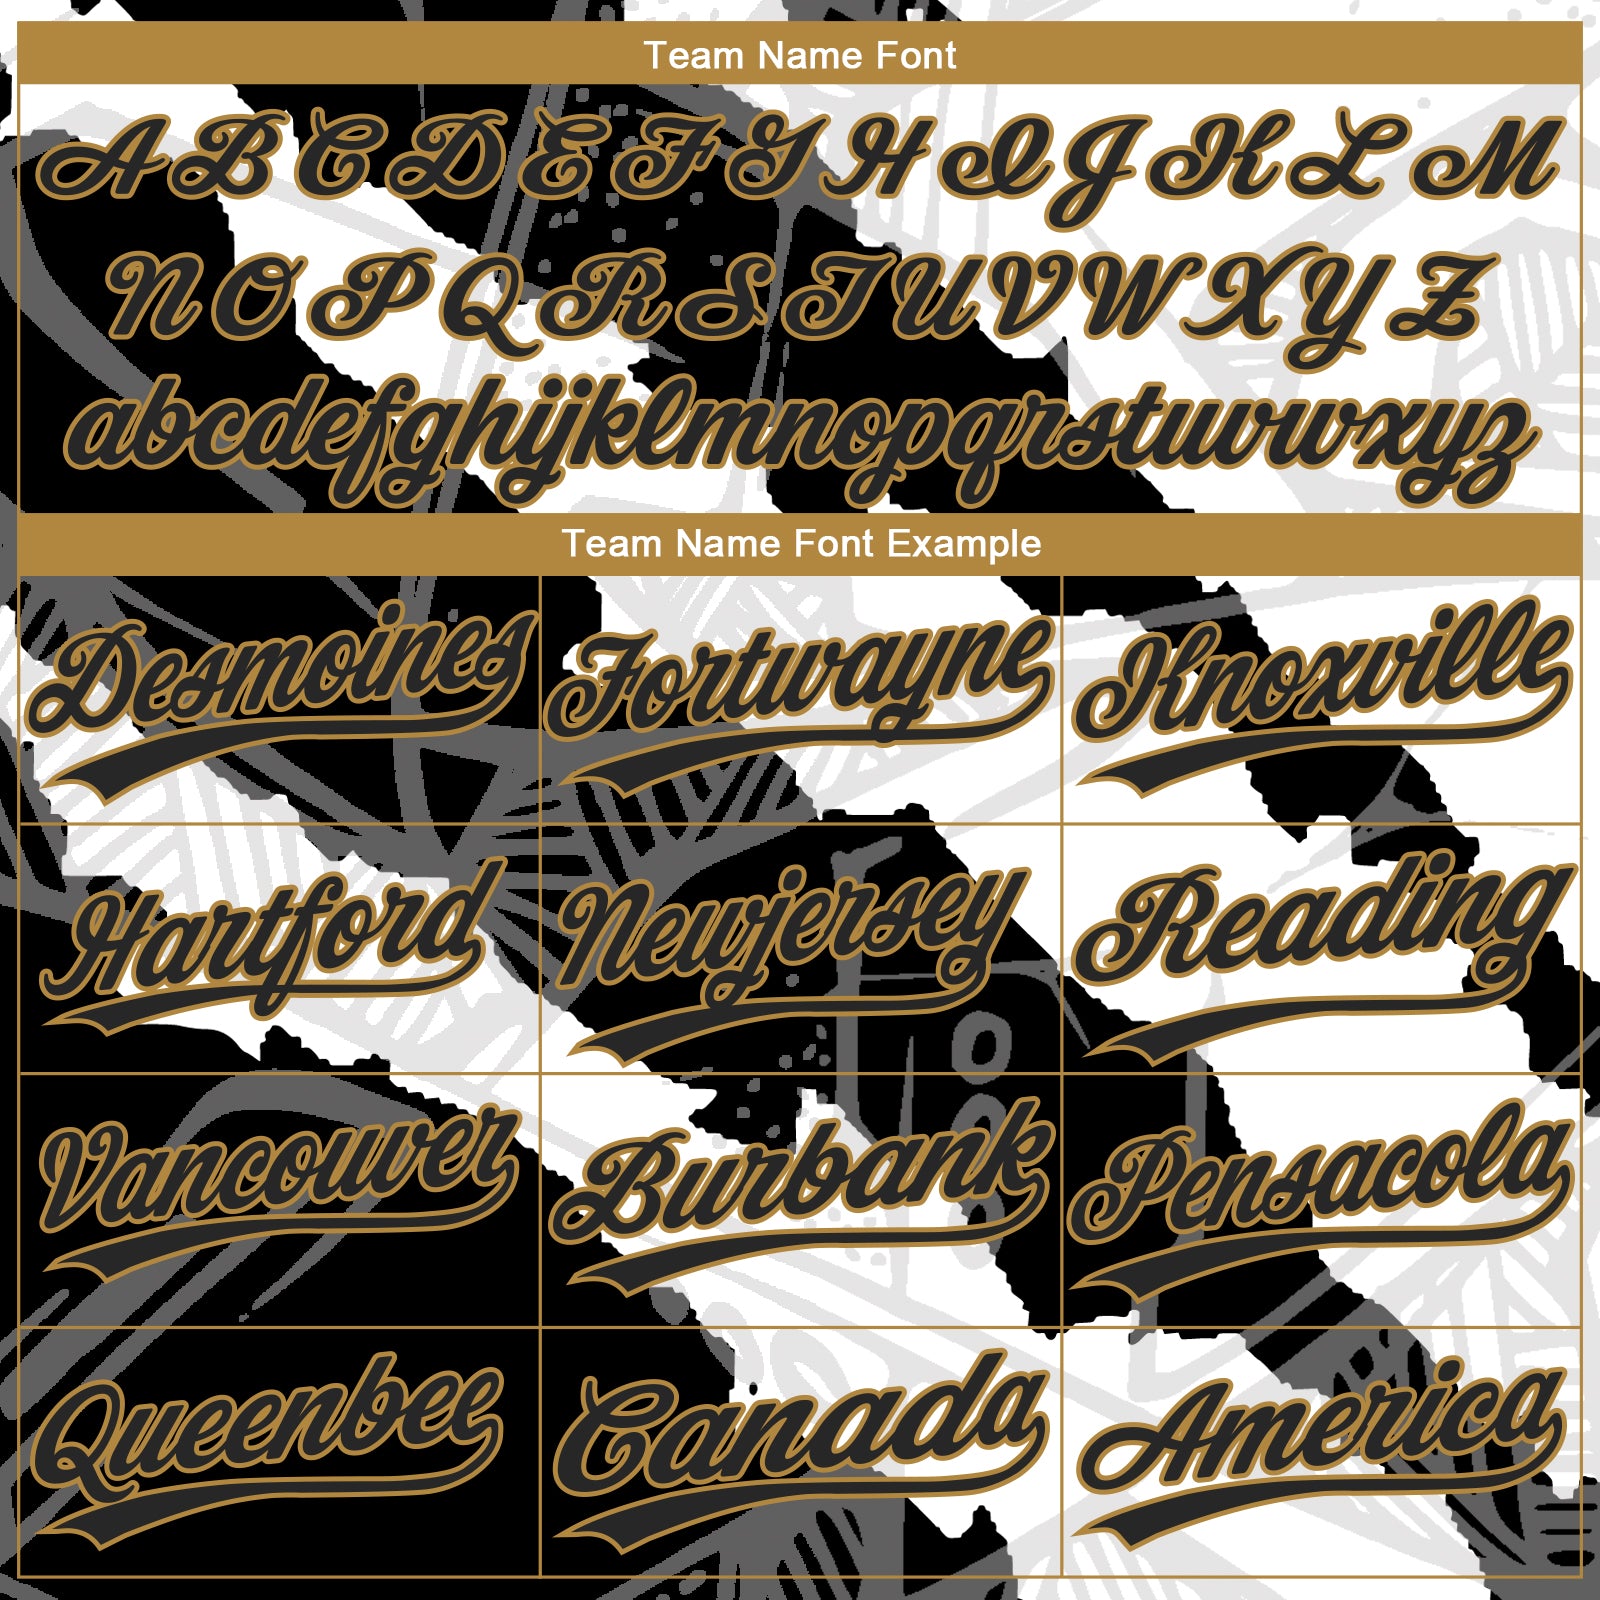 Custom Graffiti Pattern Black-Old Gold 3D Two-Button Unisex Softball Jersey Women's Size:S